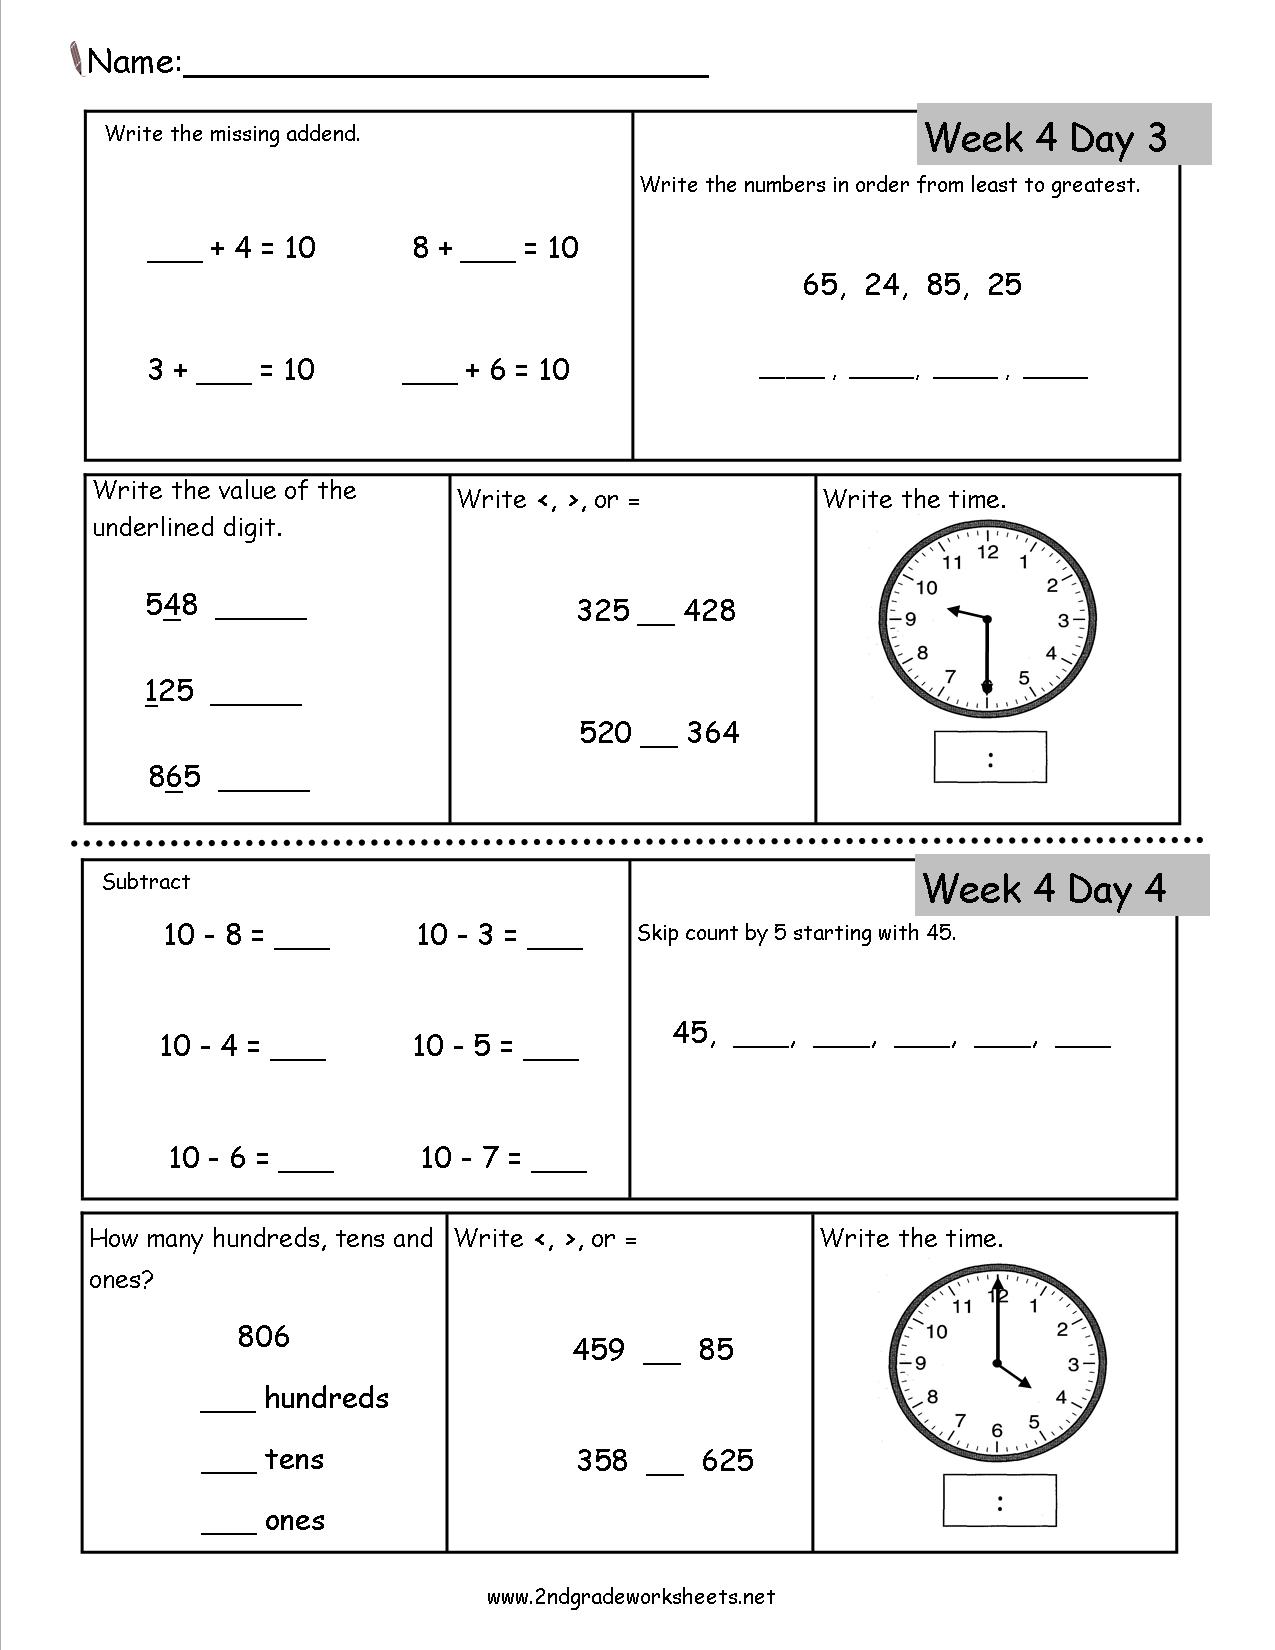 orangeflowerpatterns-11-2nd-grade-math-worksheets-printable-png